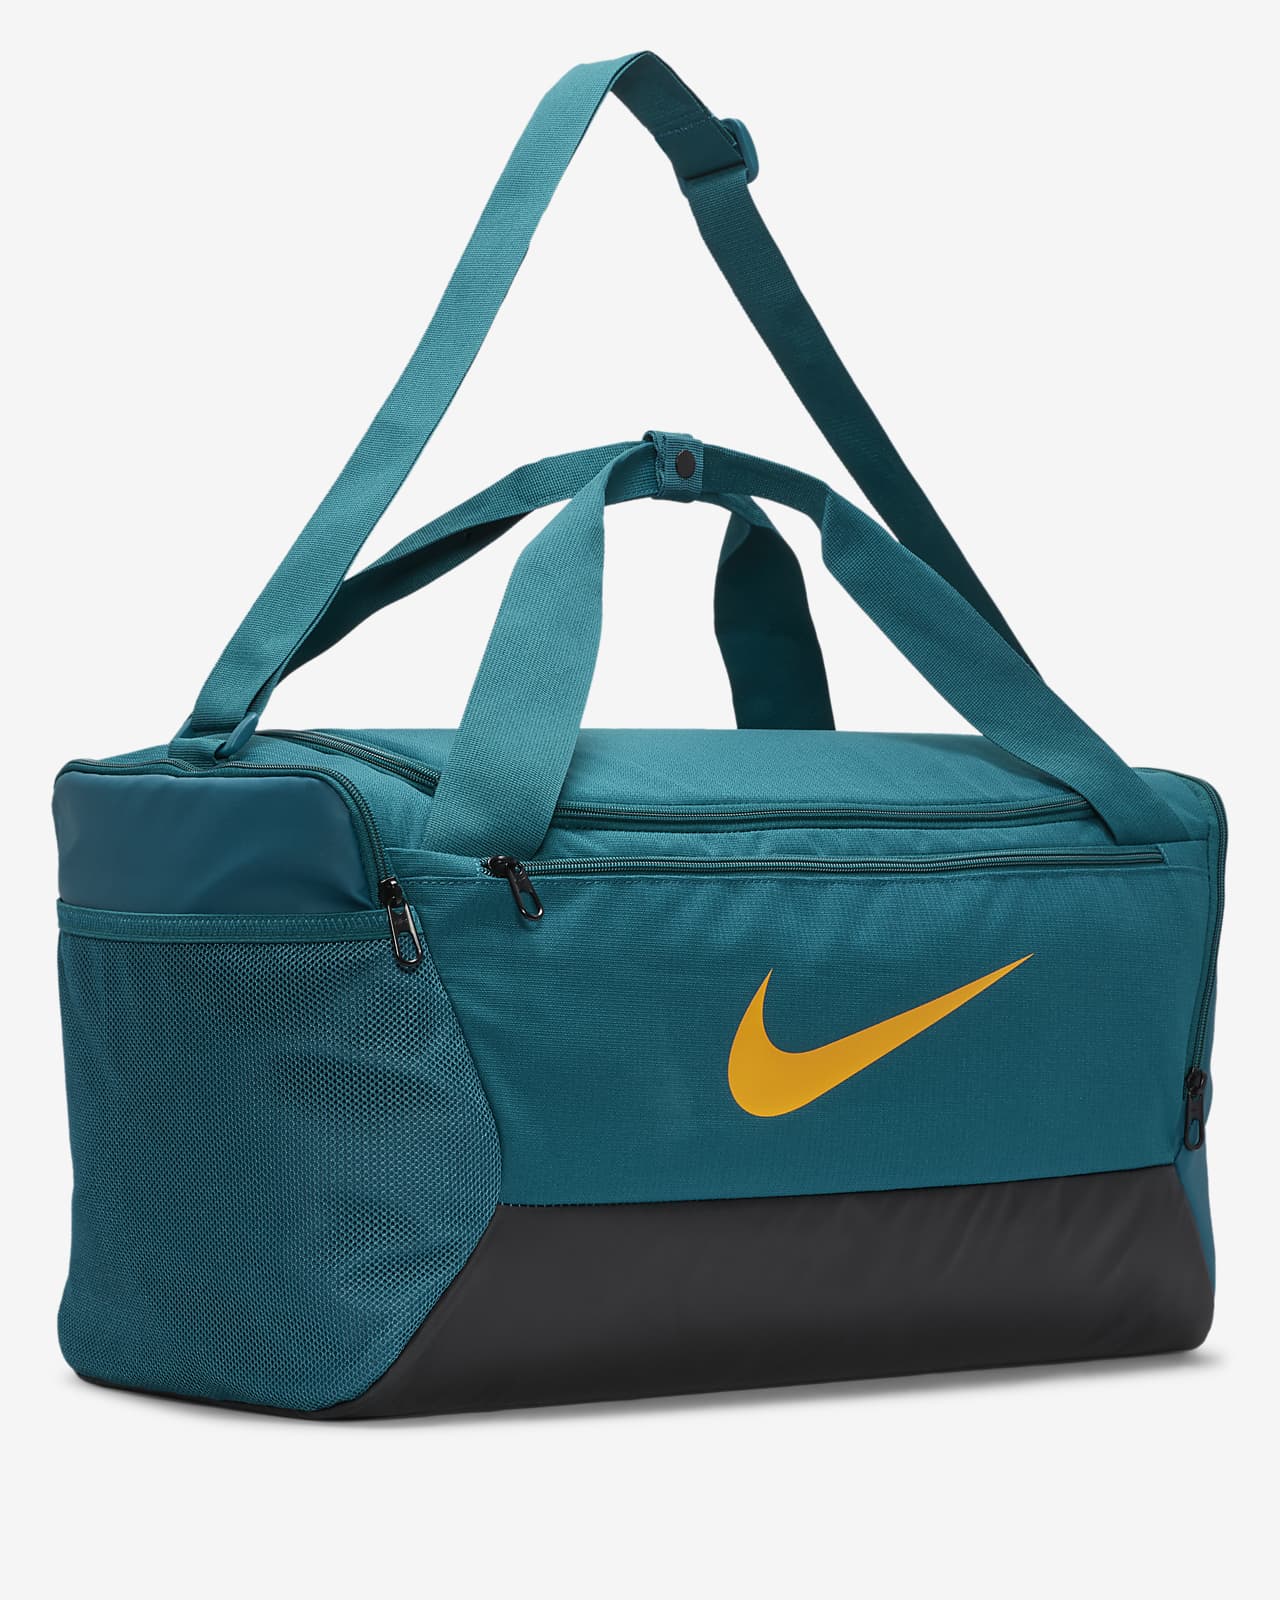 Nike 9.5 Training Duffel Bag (Small, 41L).